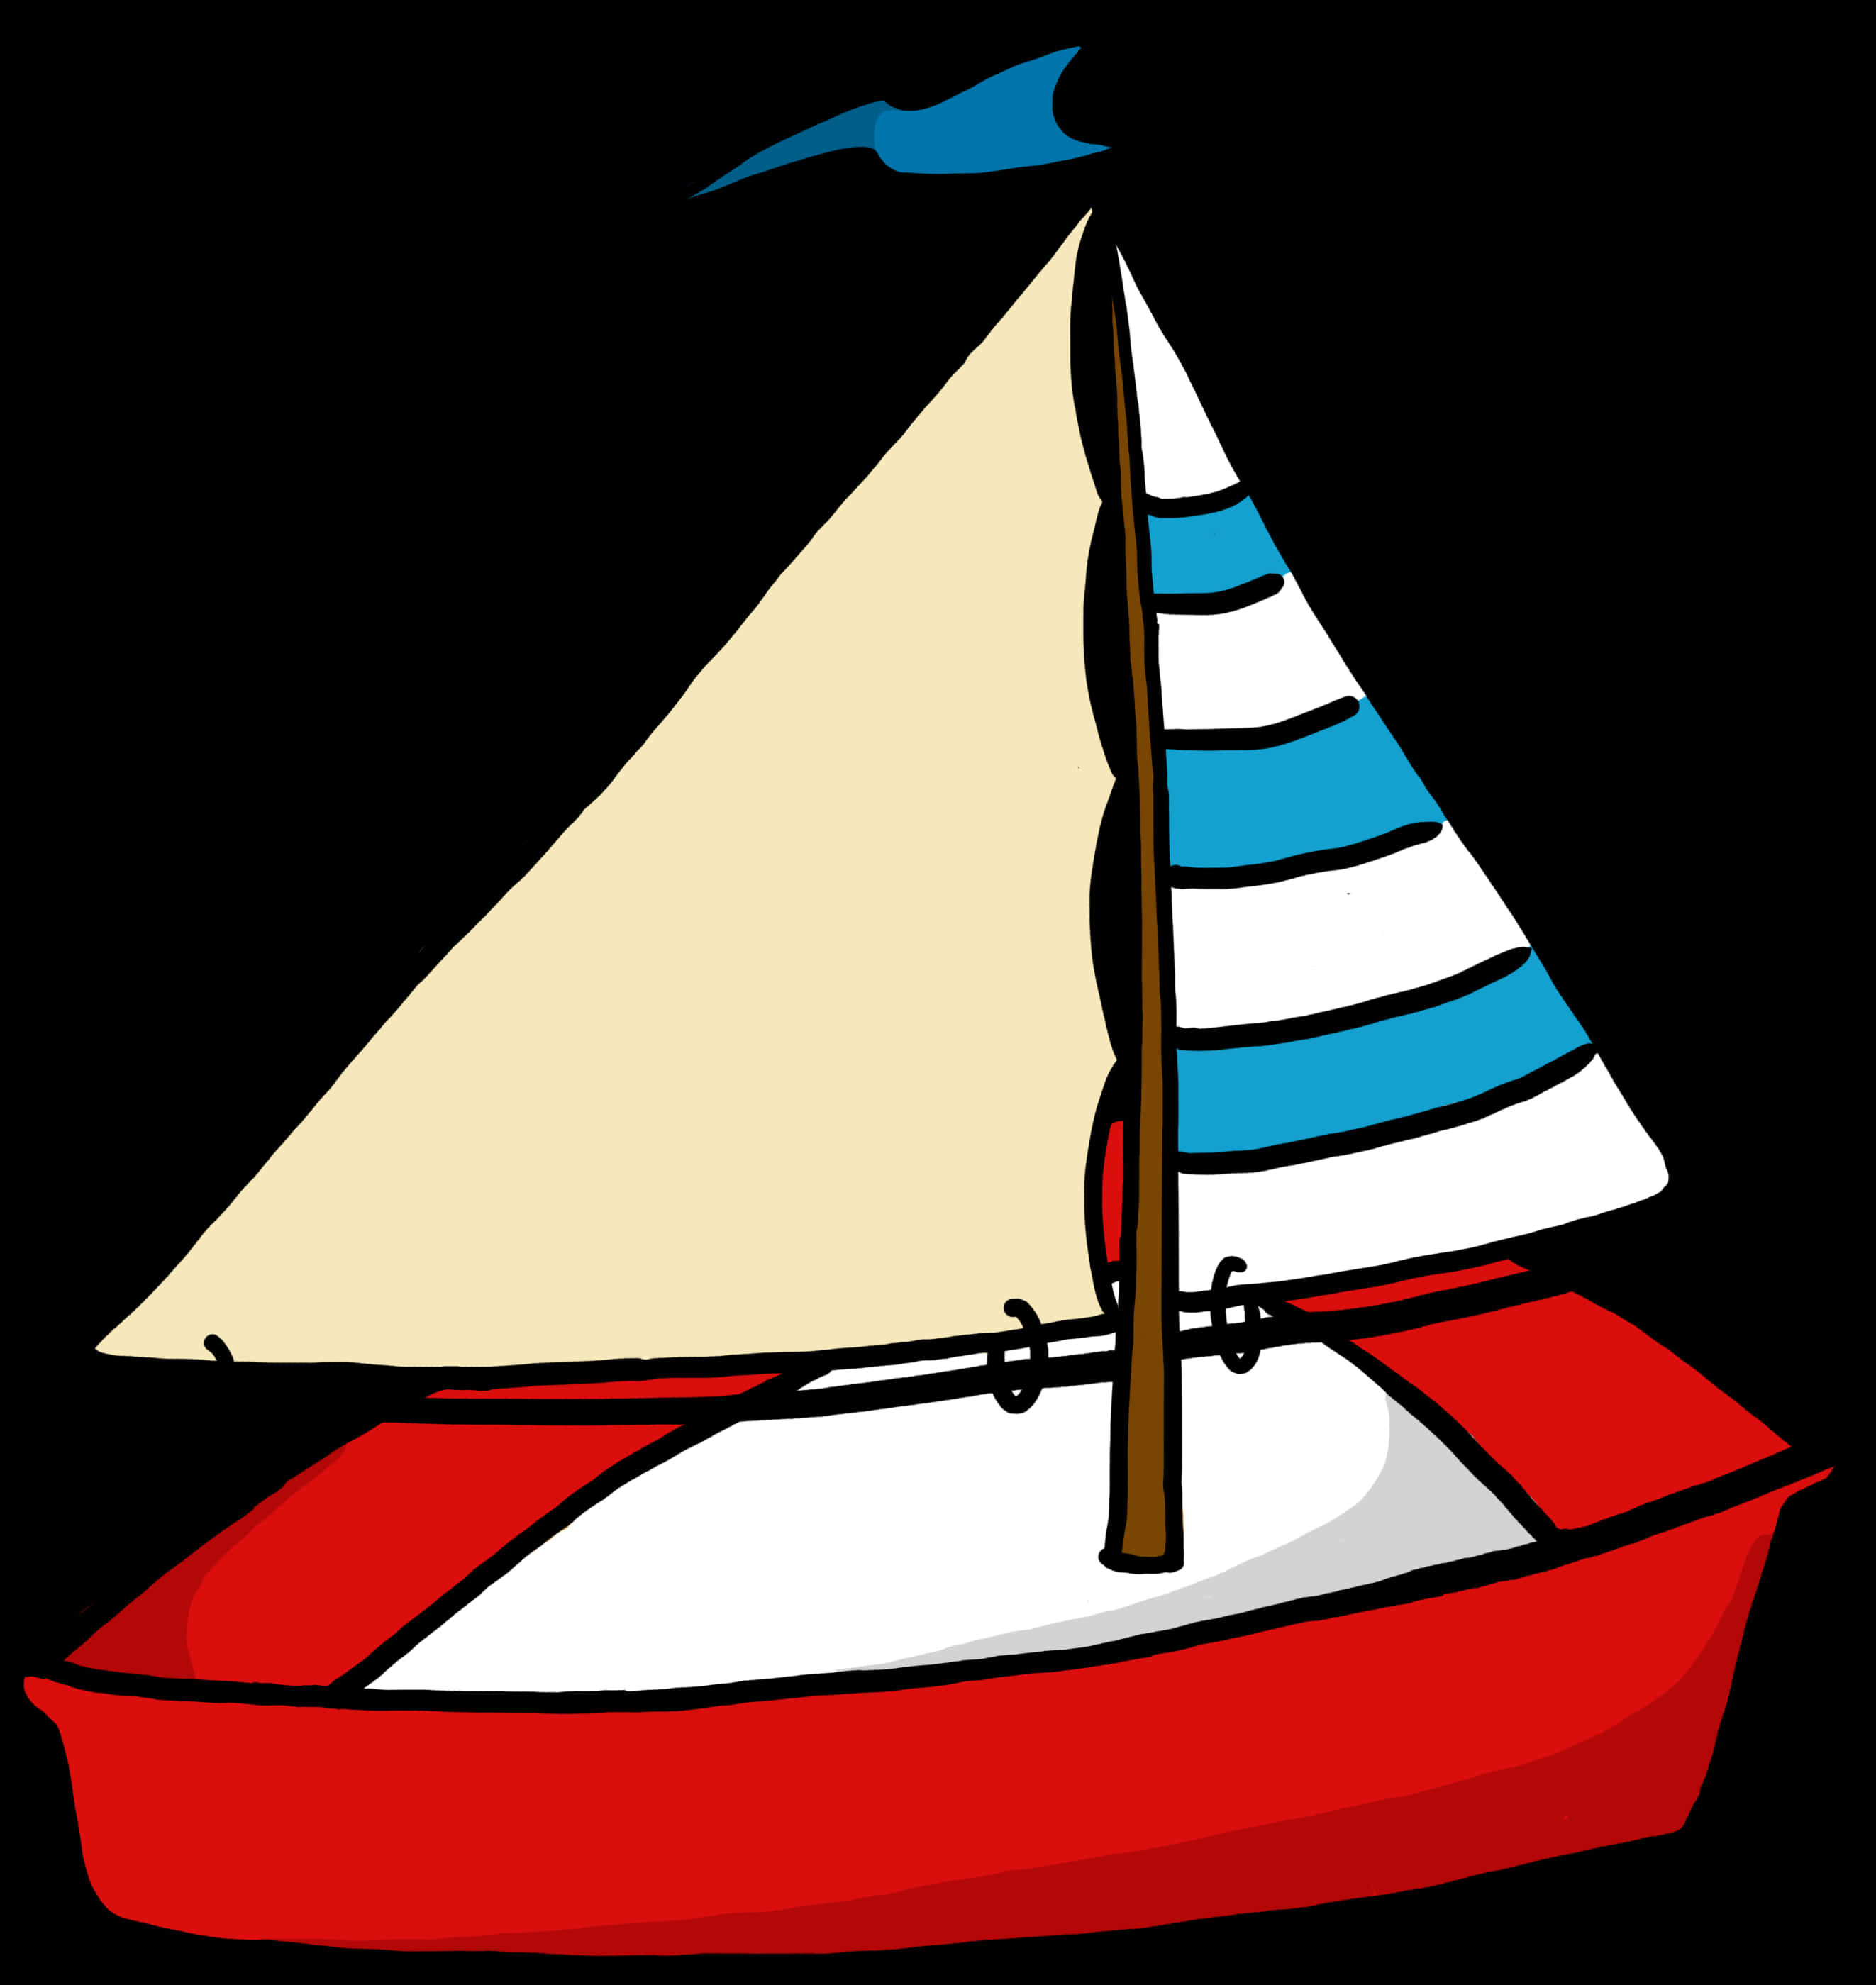 Colorful Sailboat Illustration PNG image